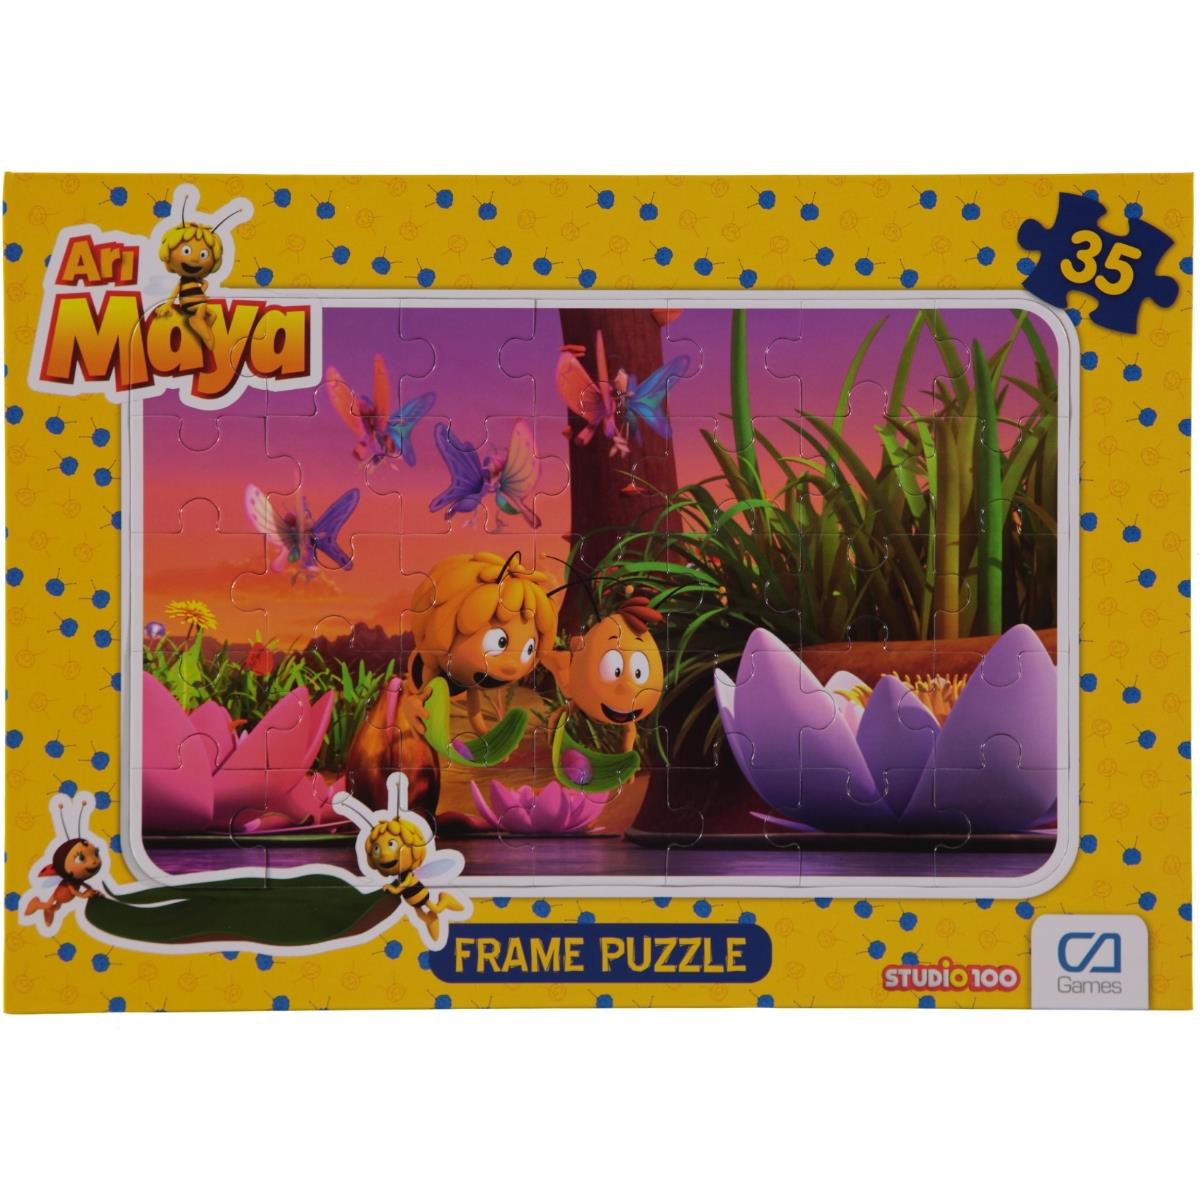 Arı Maya Frame Puzzle 35 Parça 3+ Yaş